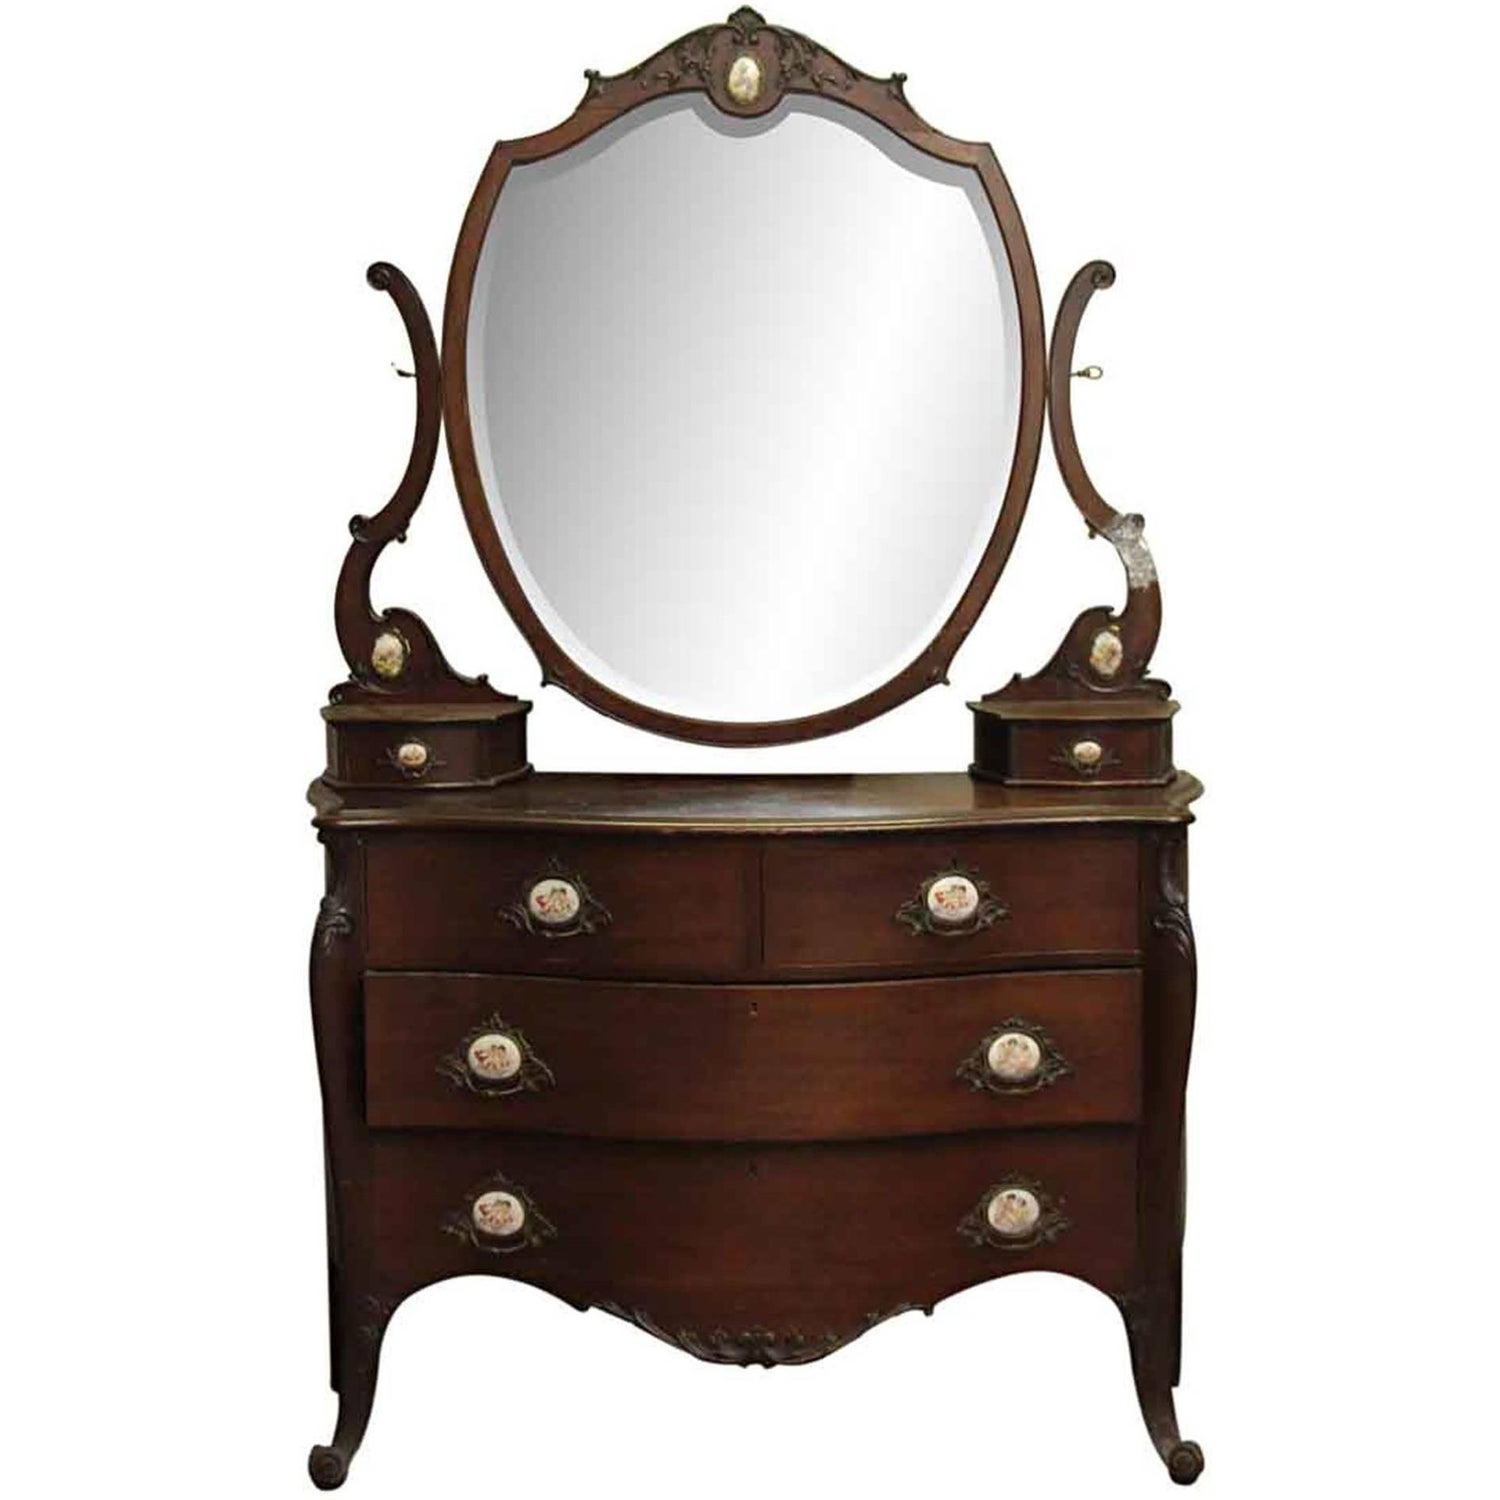 1880s Queen Anne Mahogany Vanity Dresser With Original Beveled